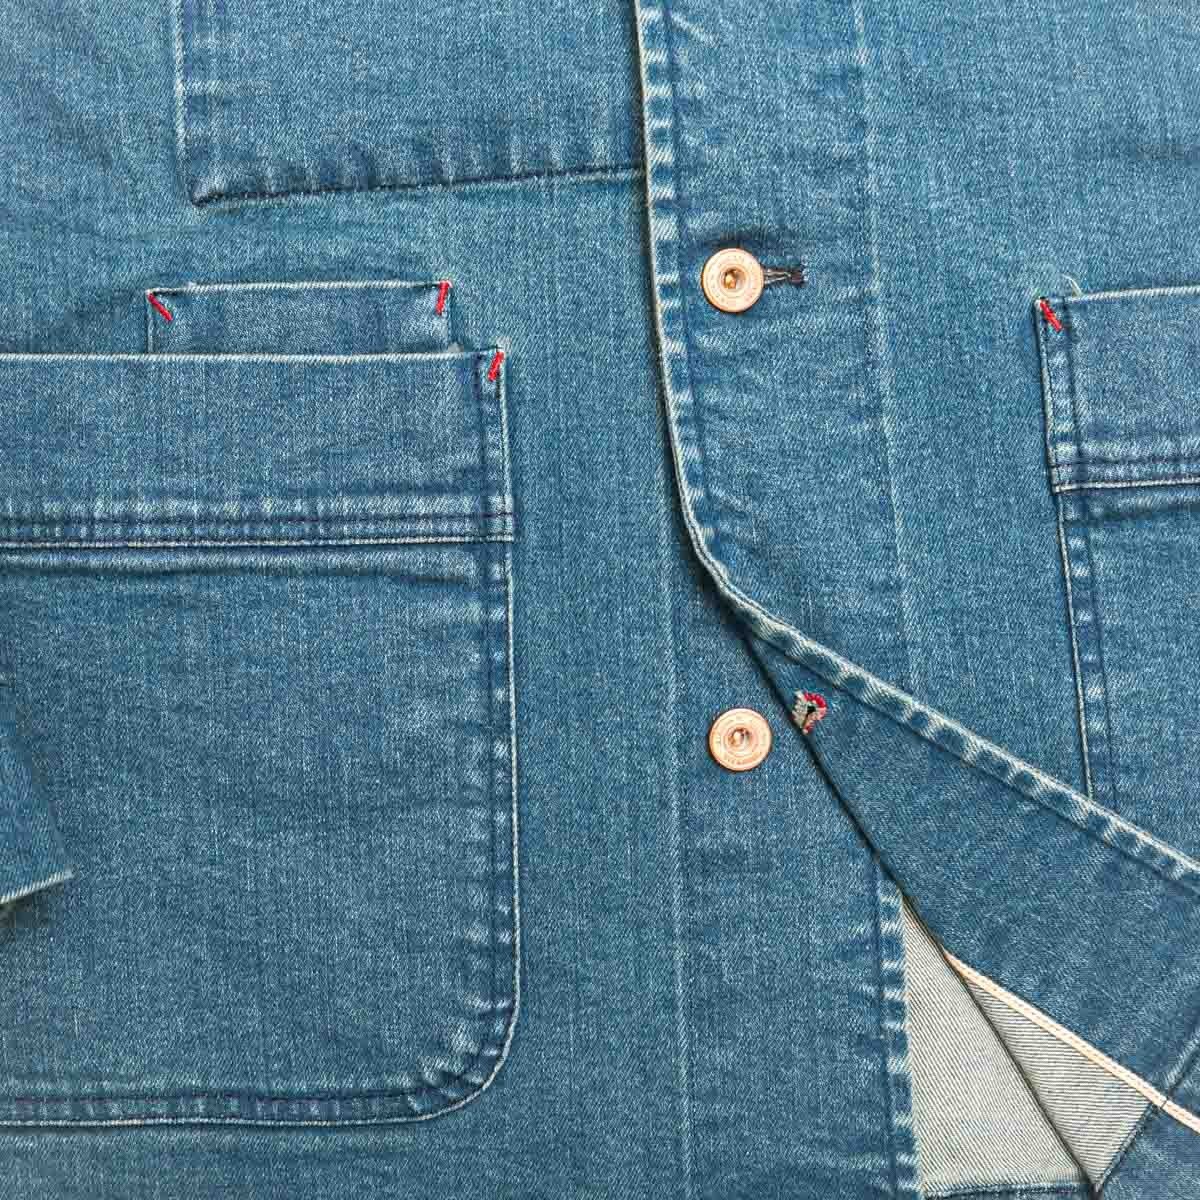 veste-worker-coton-denim-detail-poche